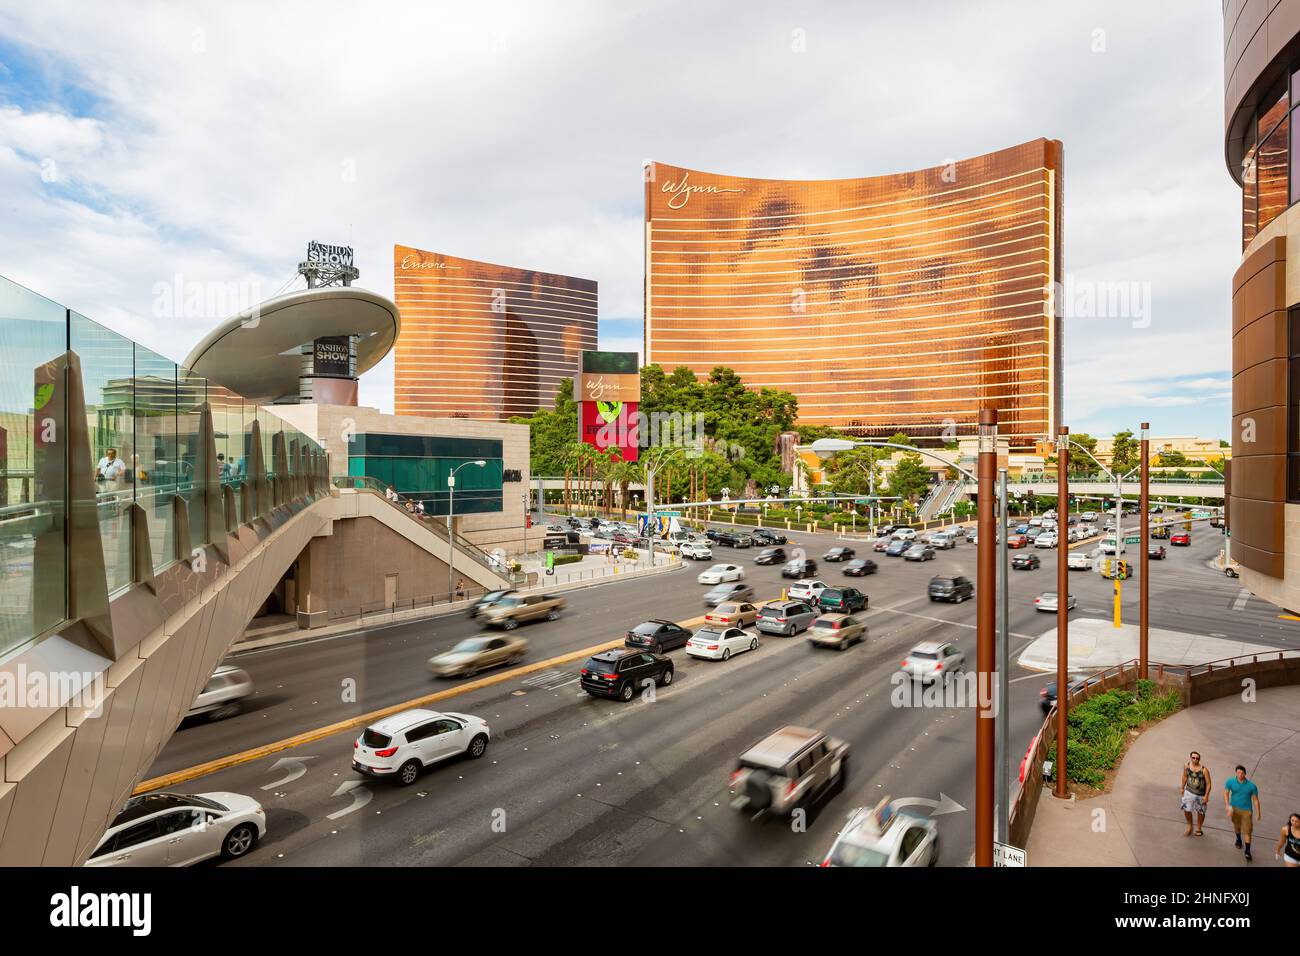 Las Vegas, AUG 5 2015 - High angle view of the Wynn Las Vegas Stock Photo